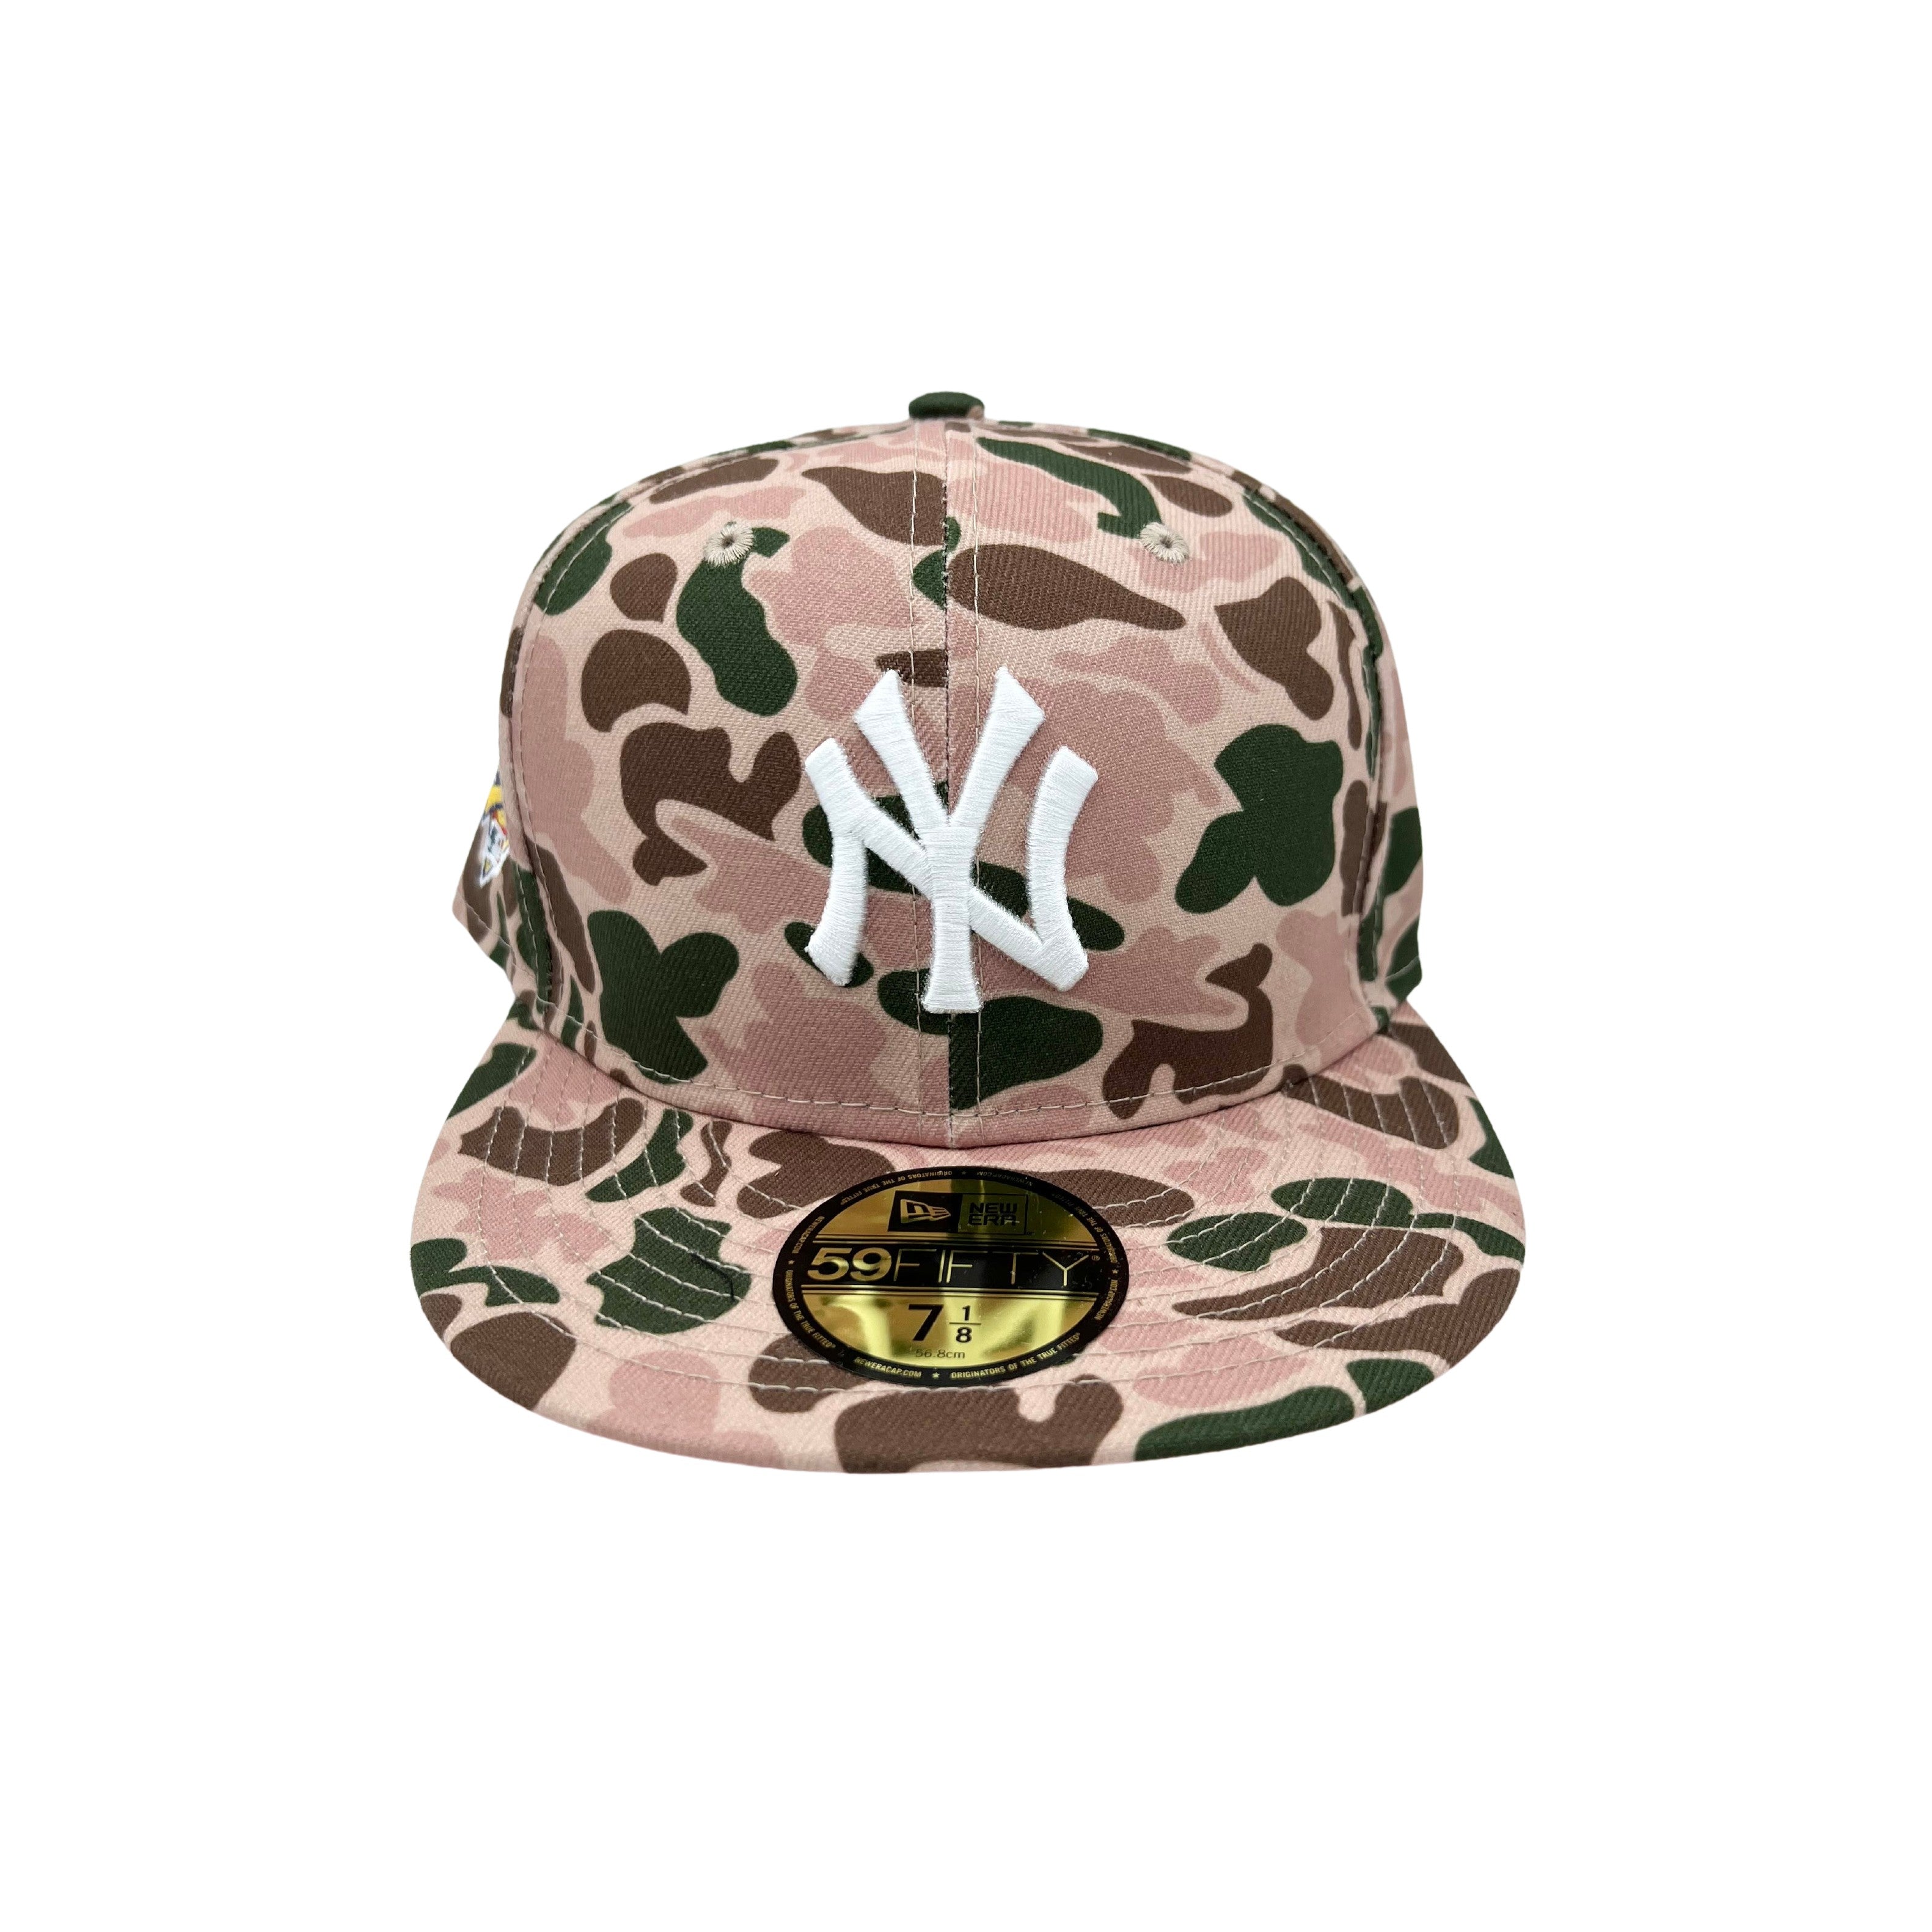 Shop New Era 59Fifty New York Yankees Hat 60237934 camo